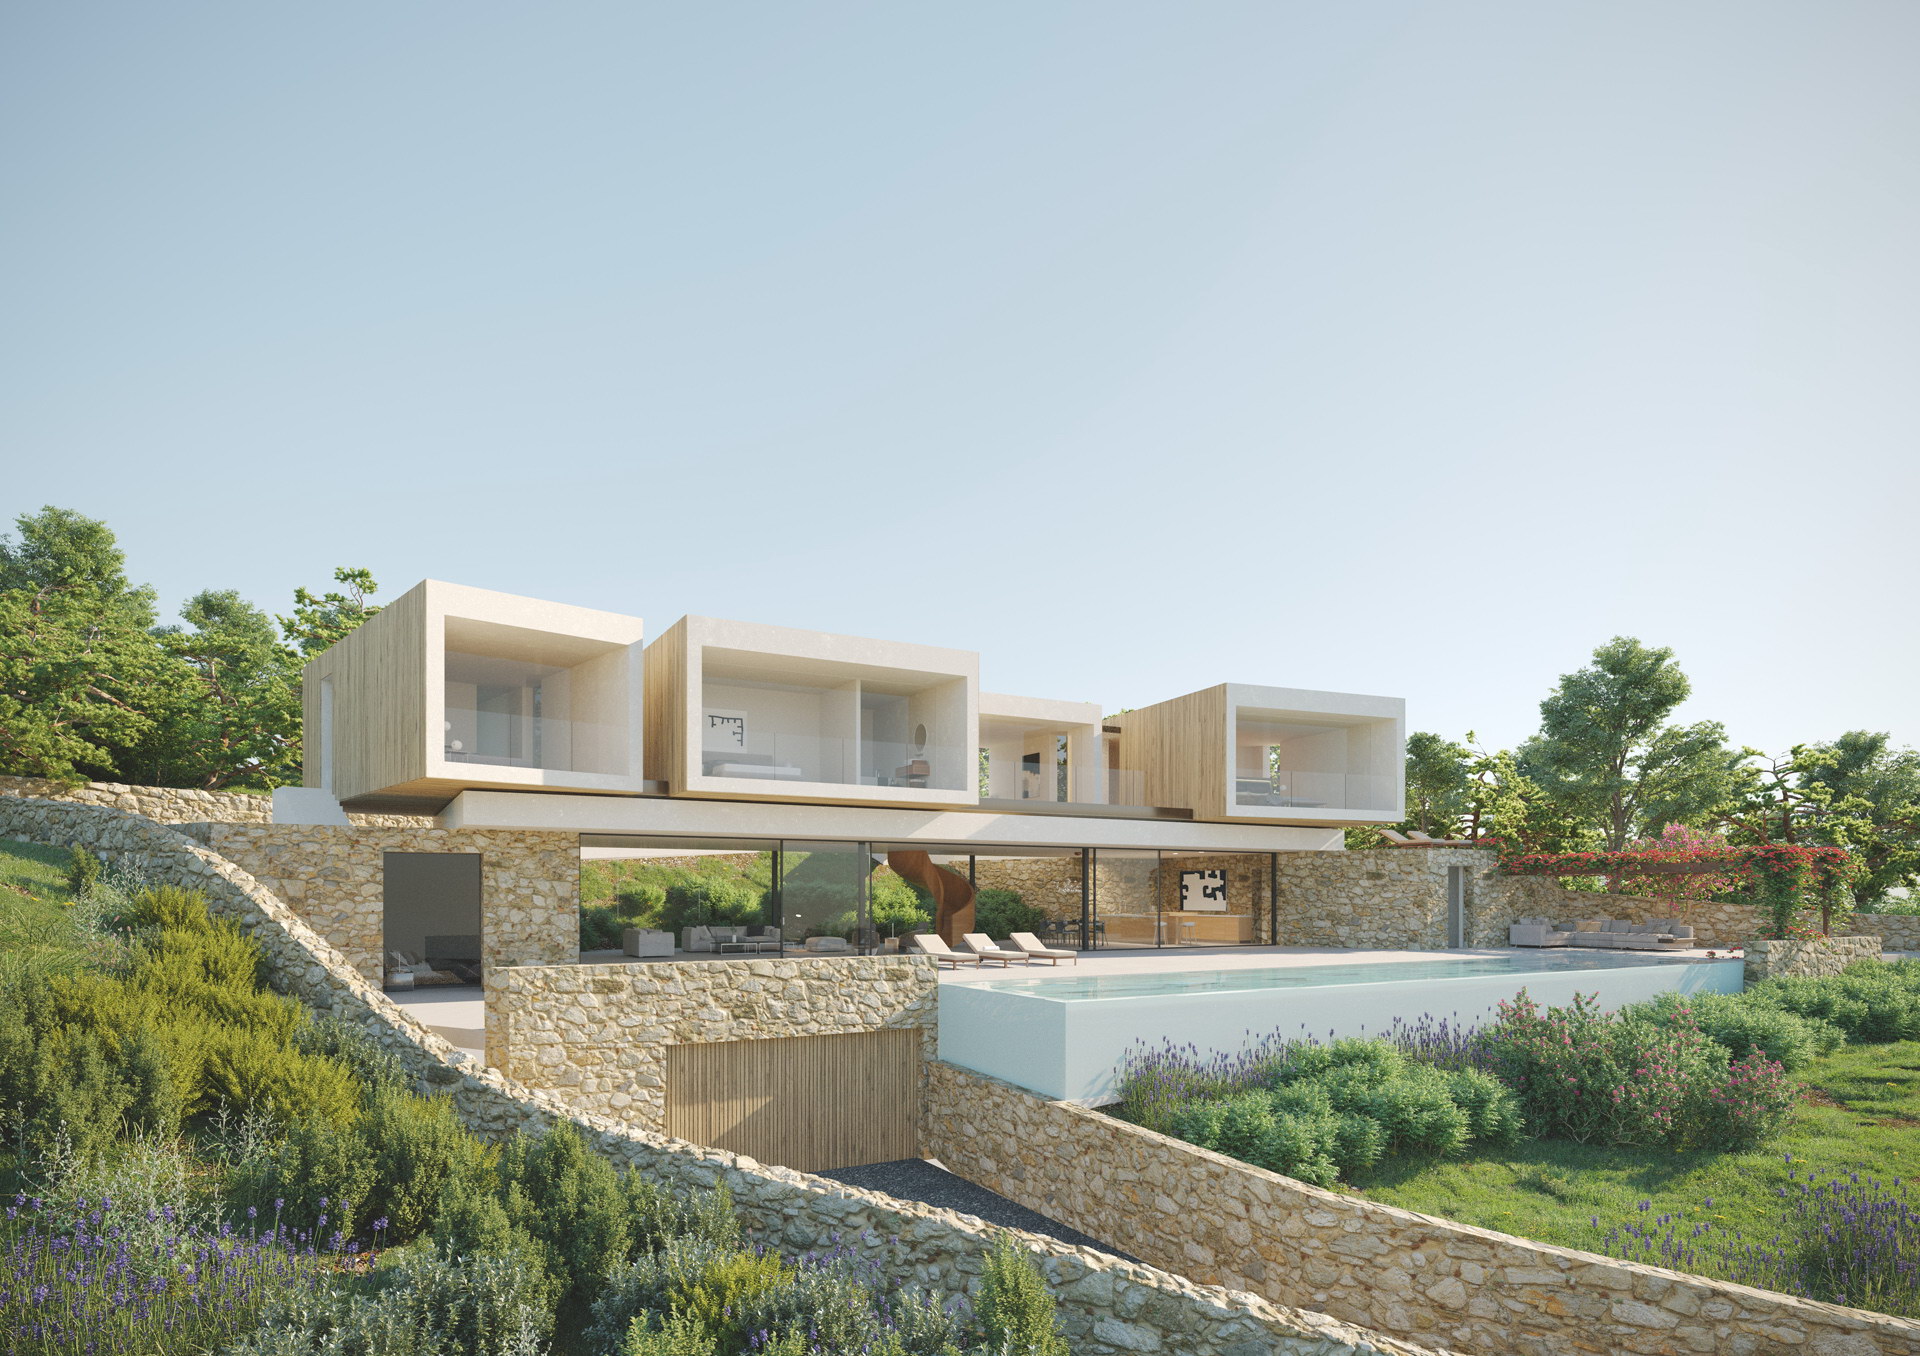 Residential Villa in Ibiza by Render Art